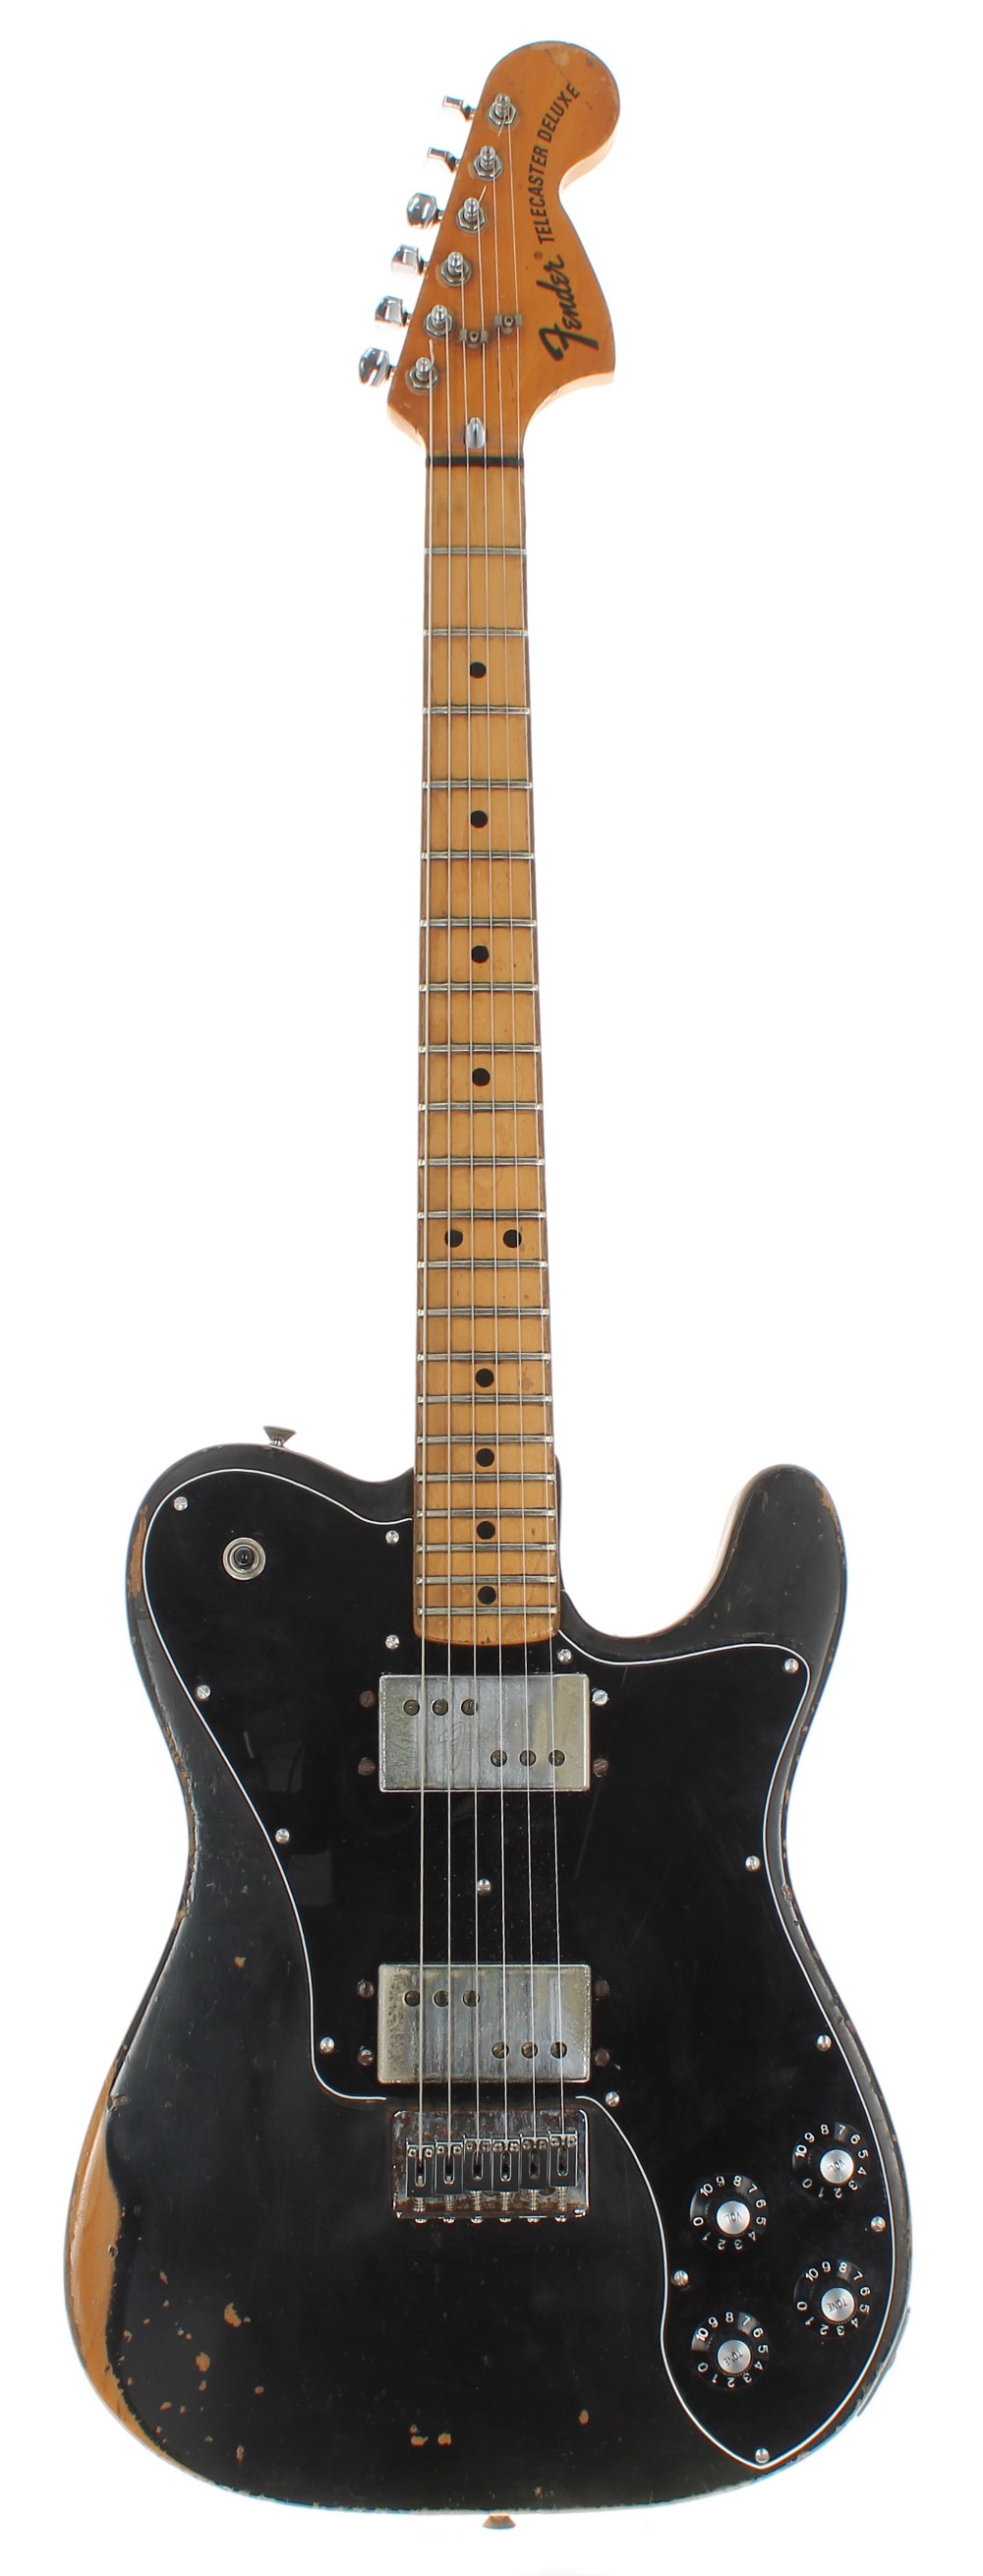 Fender Telecaster Deluxe electric guitar, made in USA, circa 1973, ser. no. 5xxxx4; Finish: black,